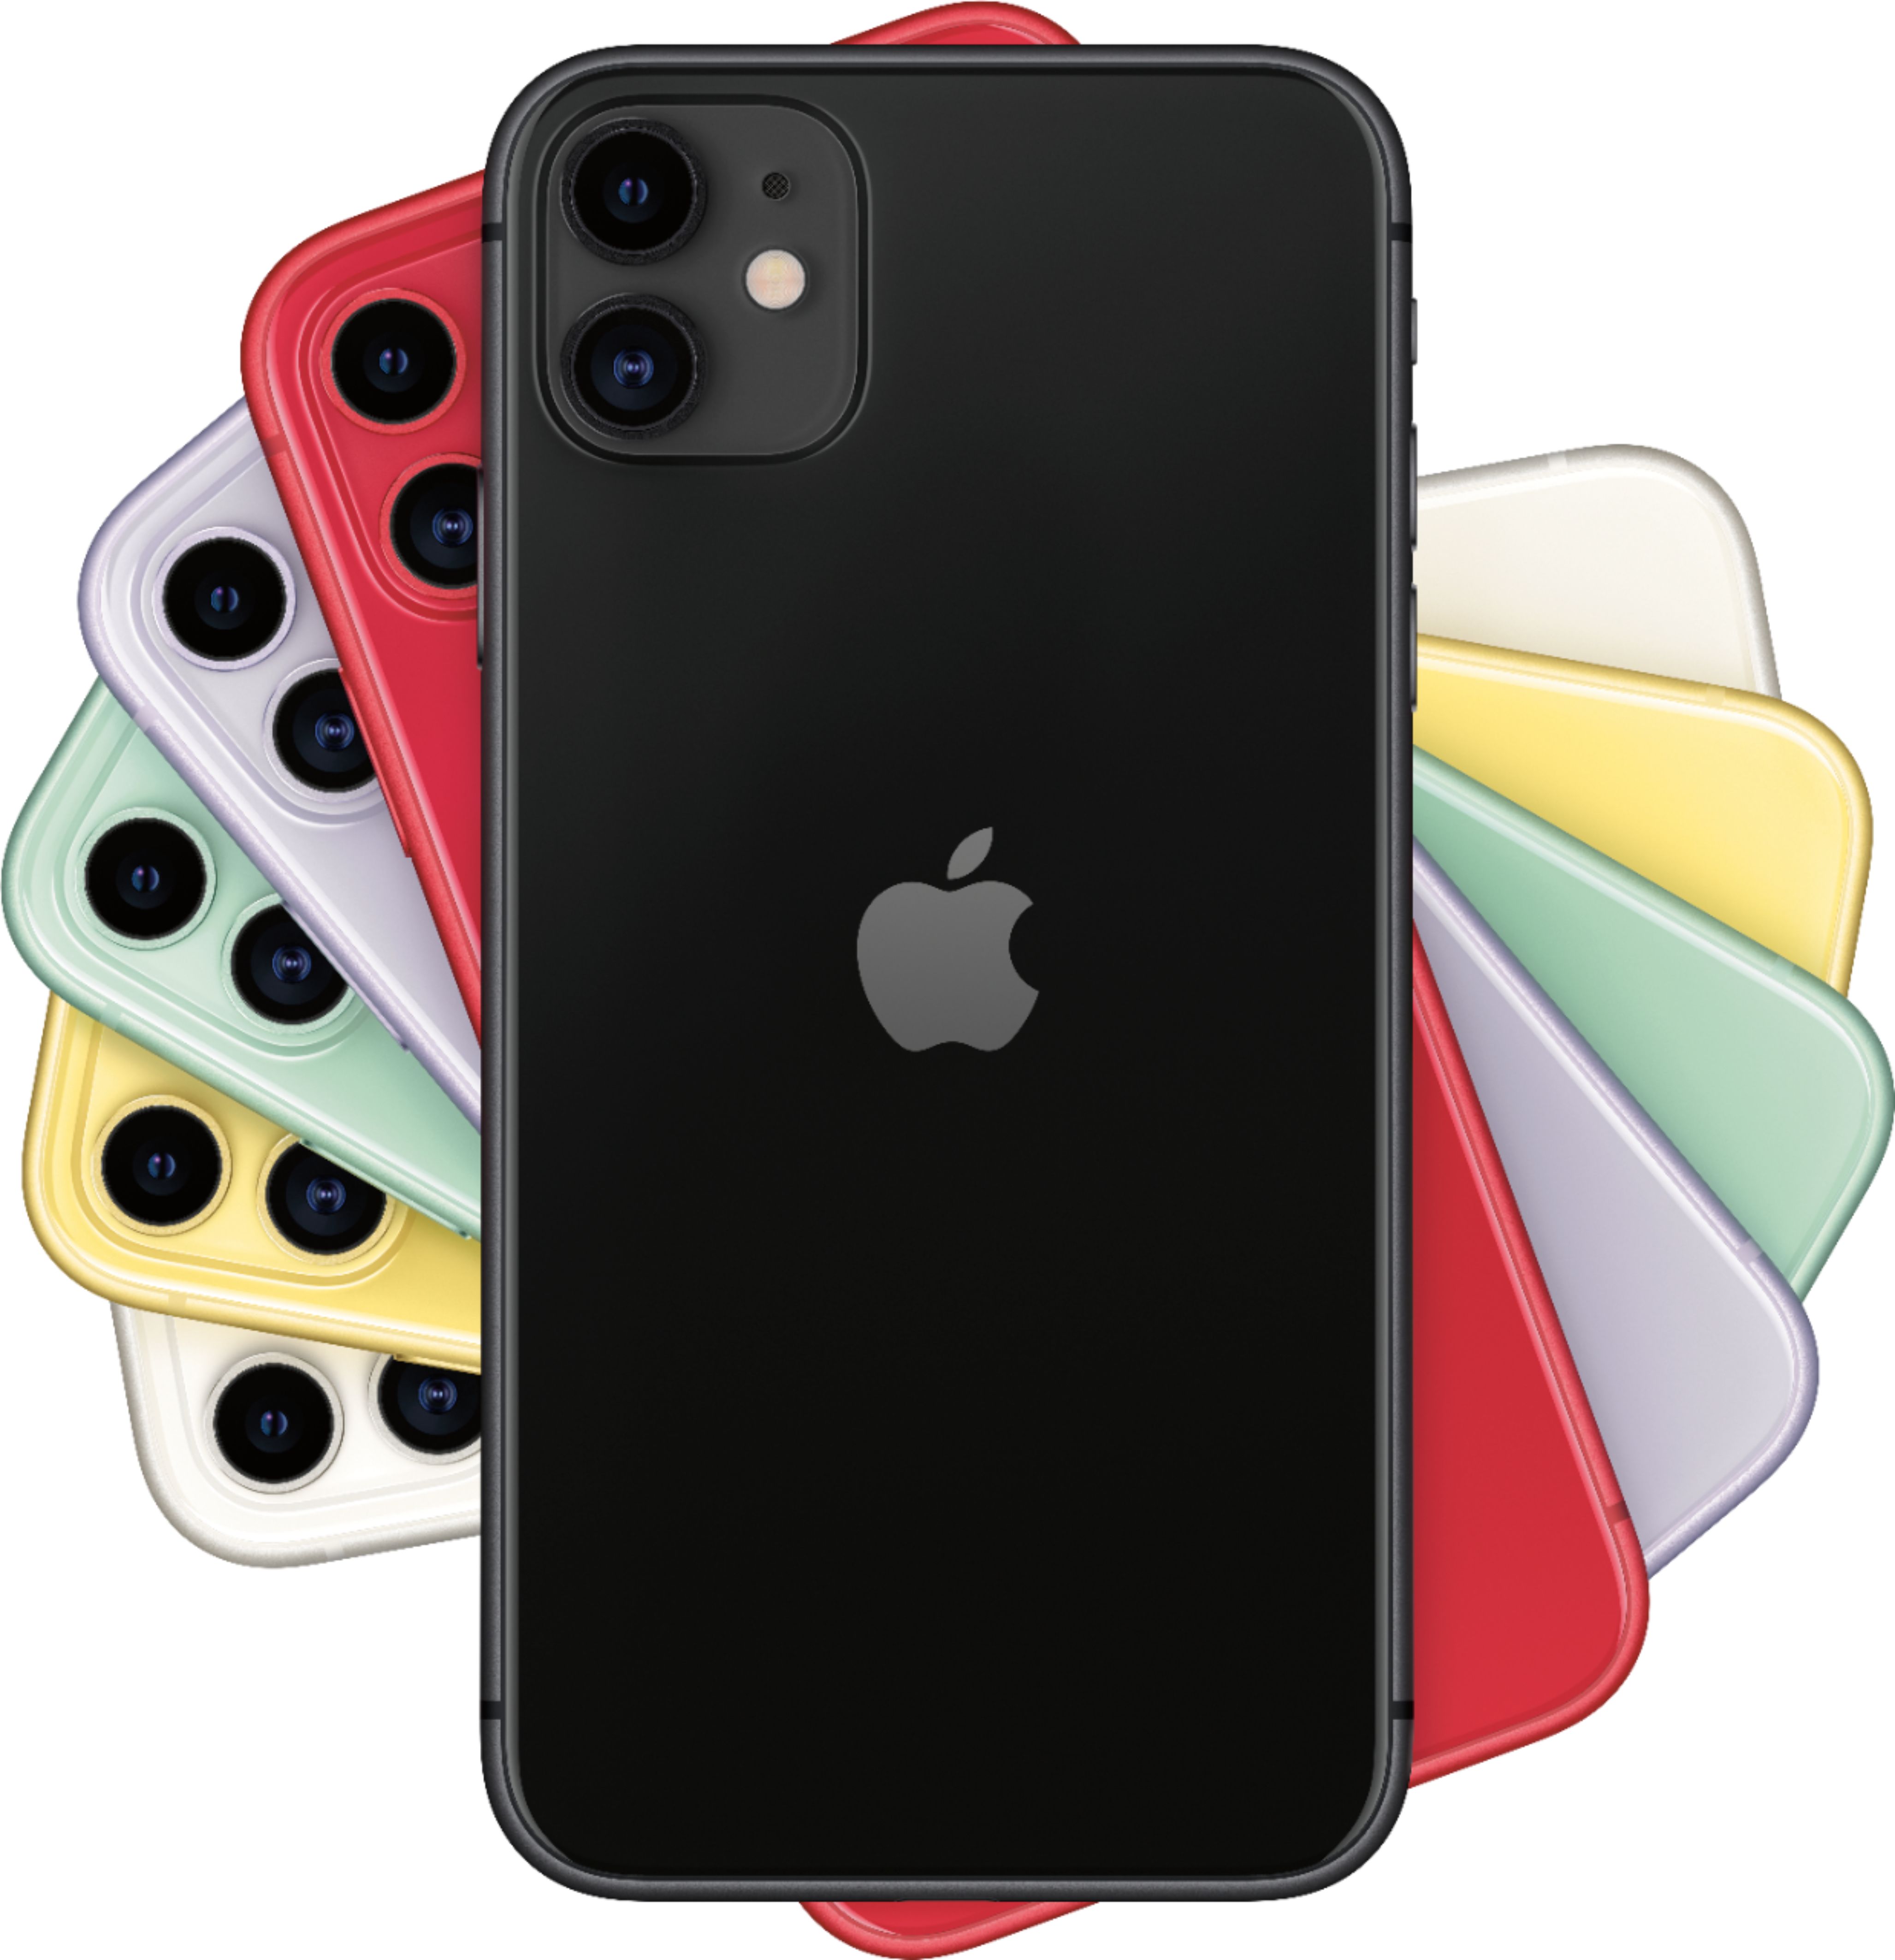 Apple Iphone 11 64gb Black At T Mwl72ll A Best Buy